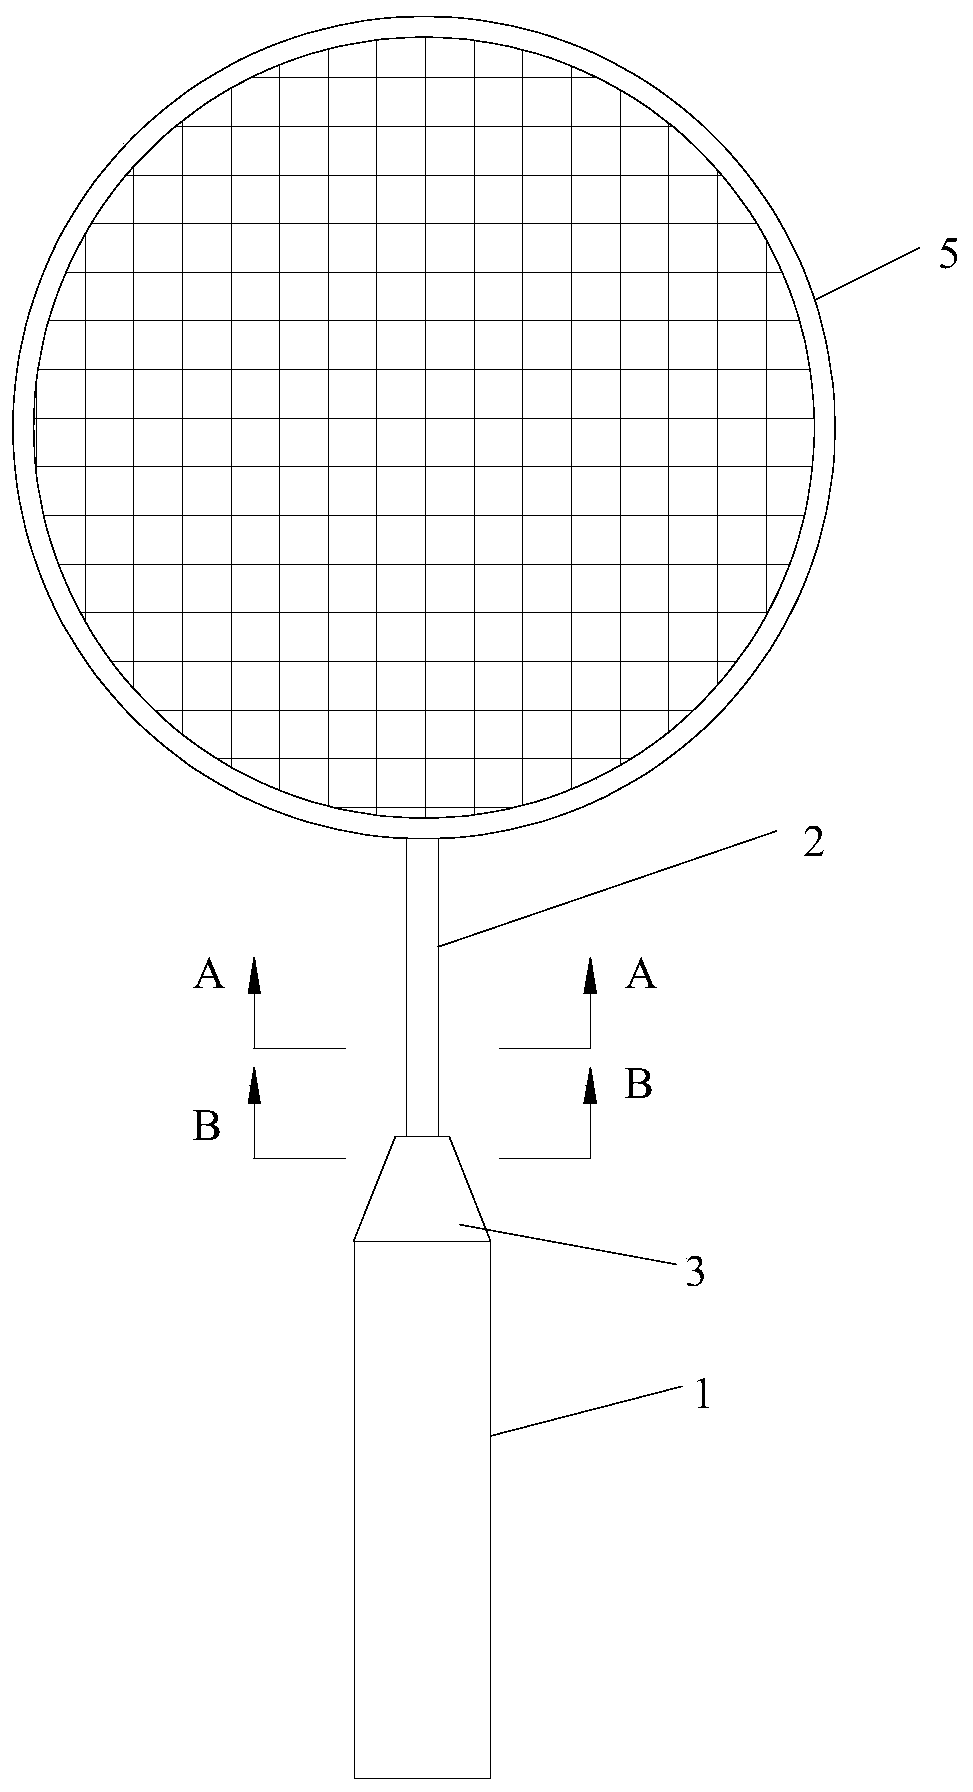 Gradually changed badminton racket